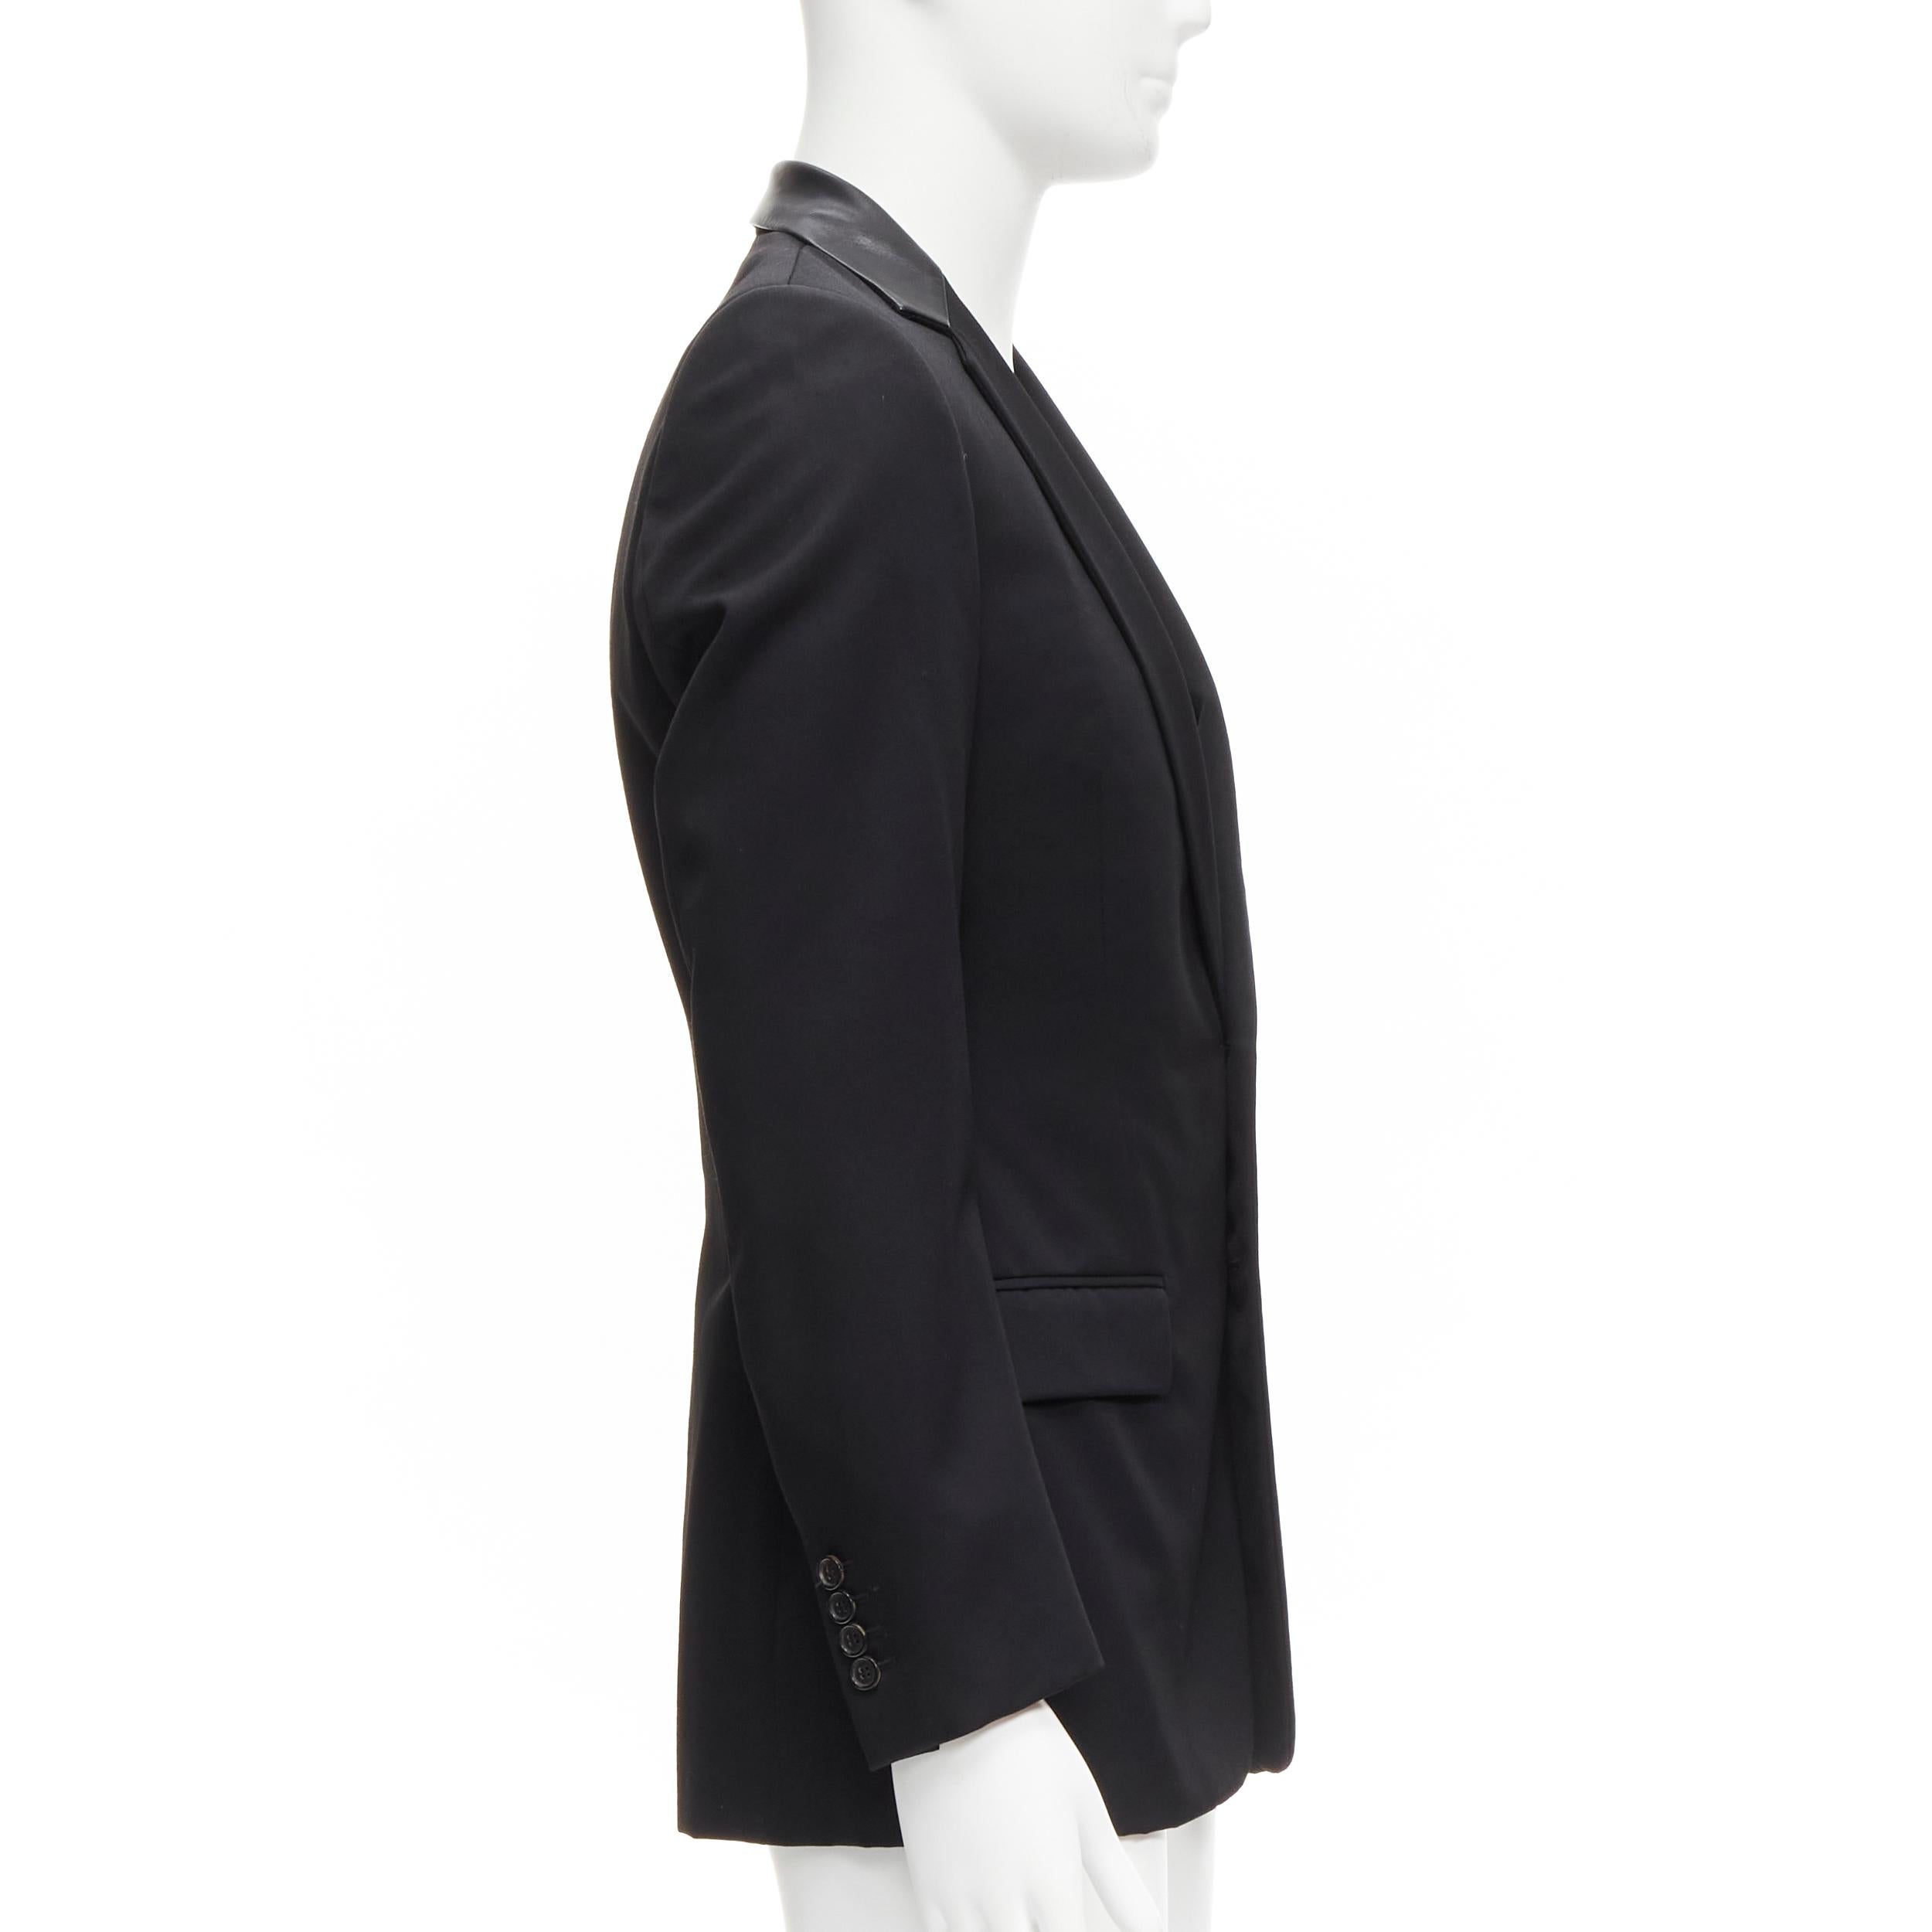 DIOR HOMME Hedi Slimane leather collar classic 2-button blazer jacket FR46 S 1